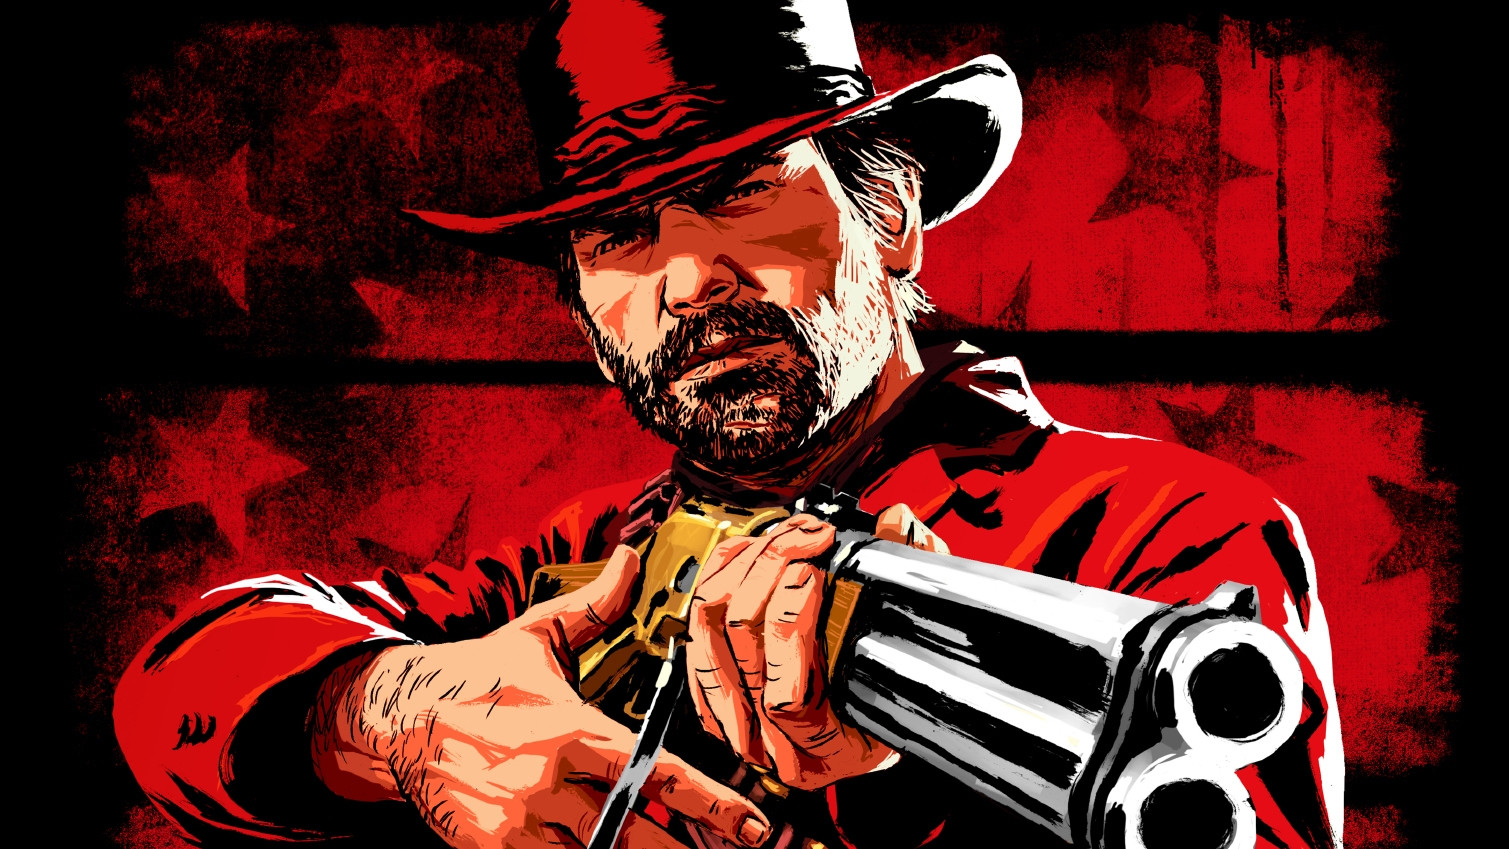 Red Dead Redemption 2 - PC Windows - Elkjøp